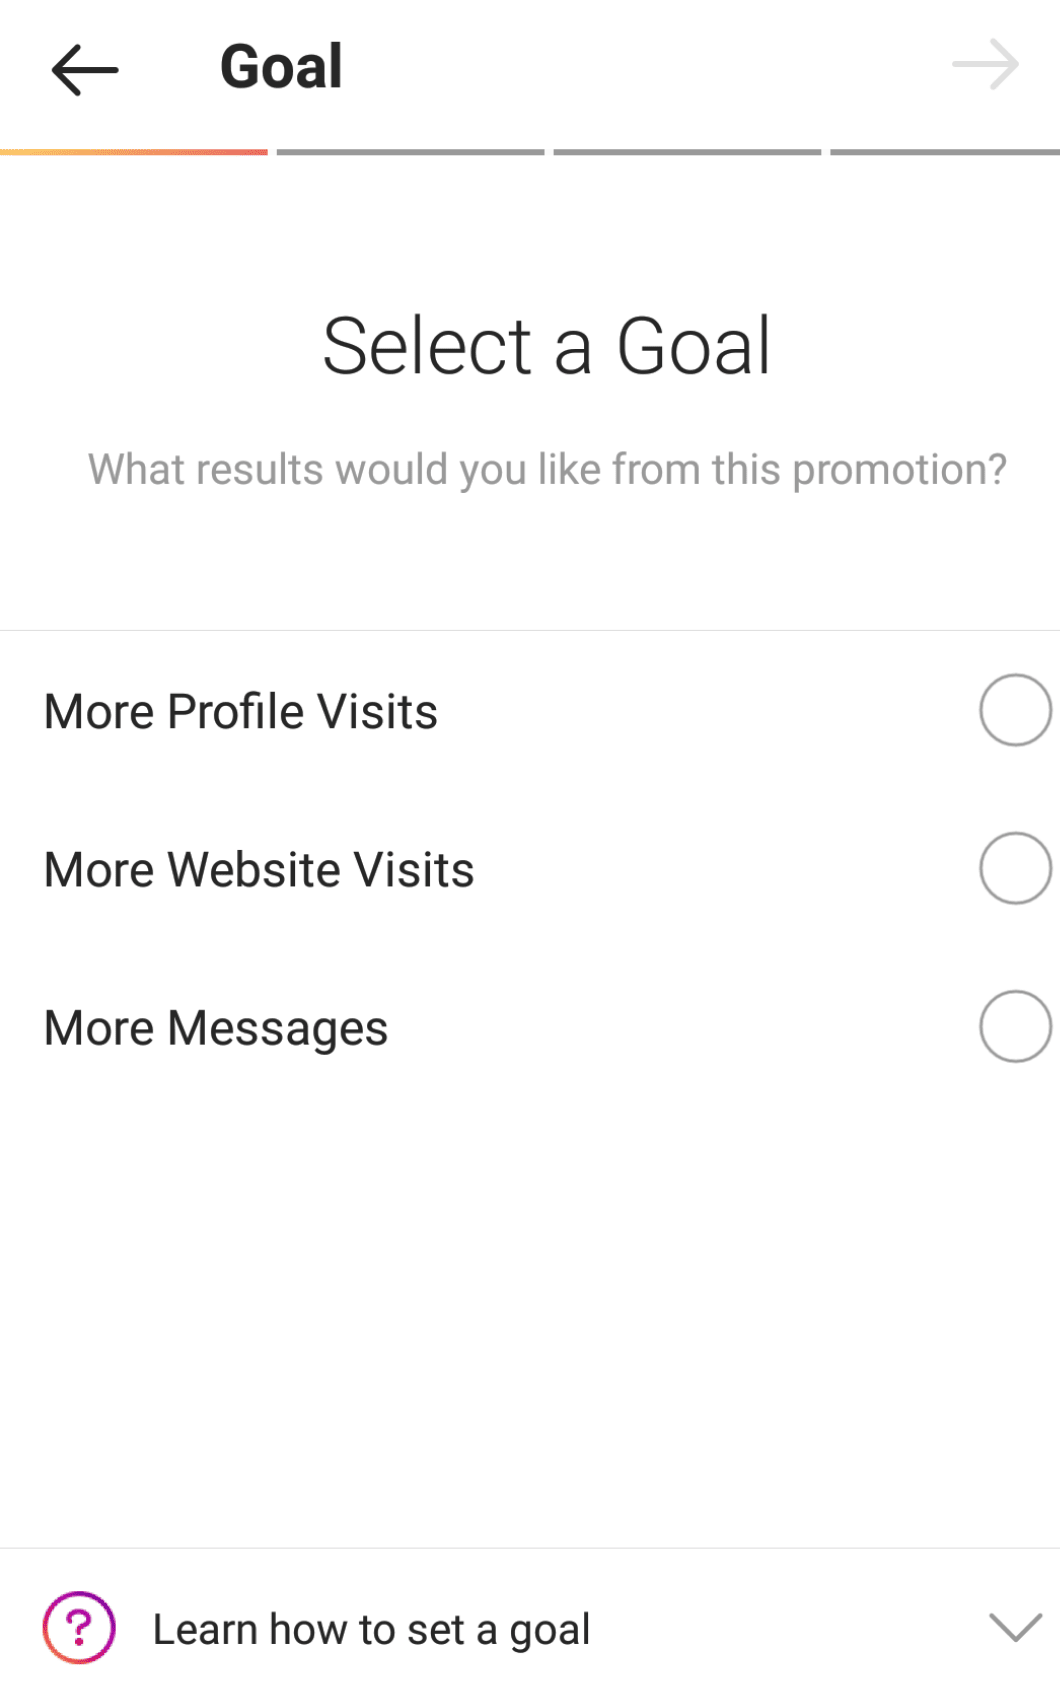 Select a goal